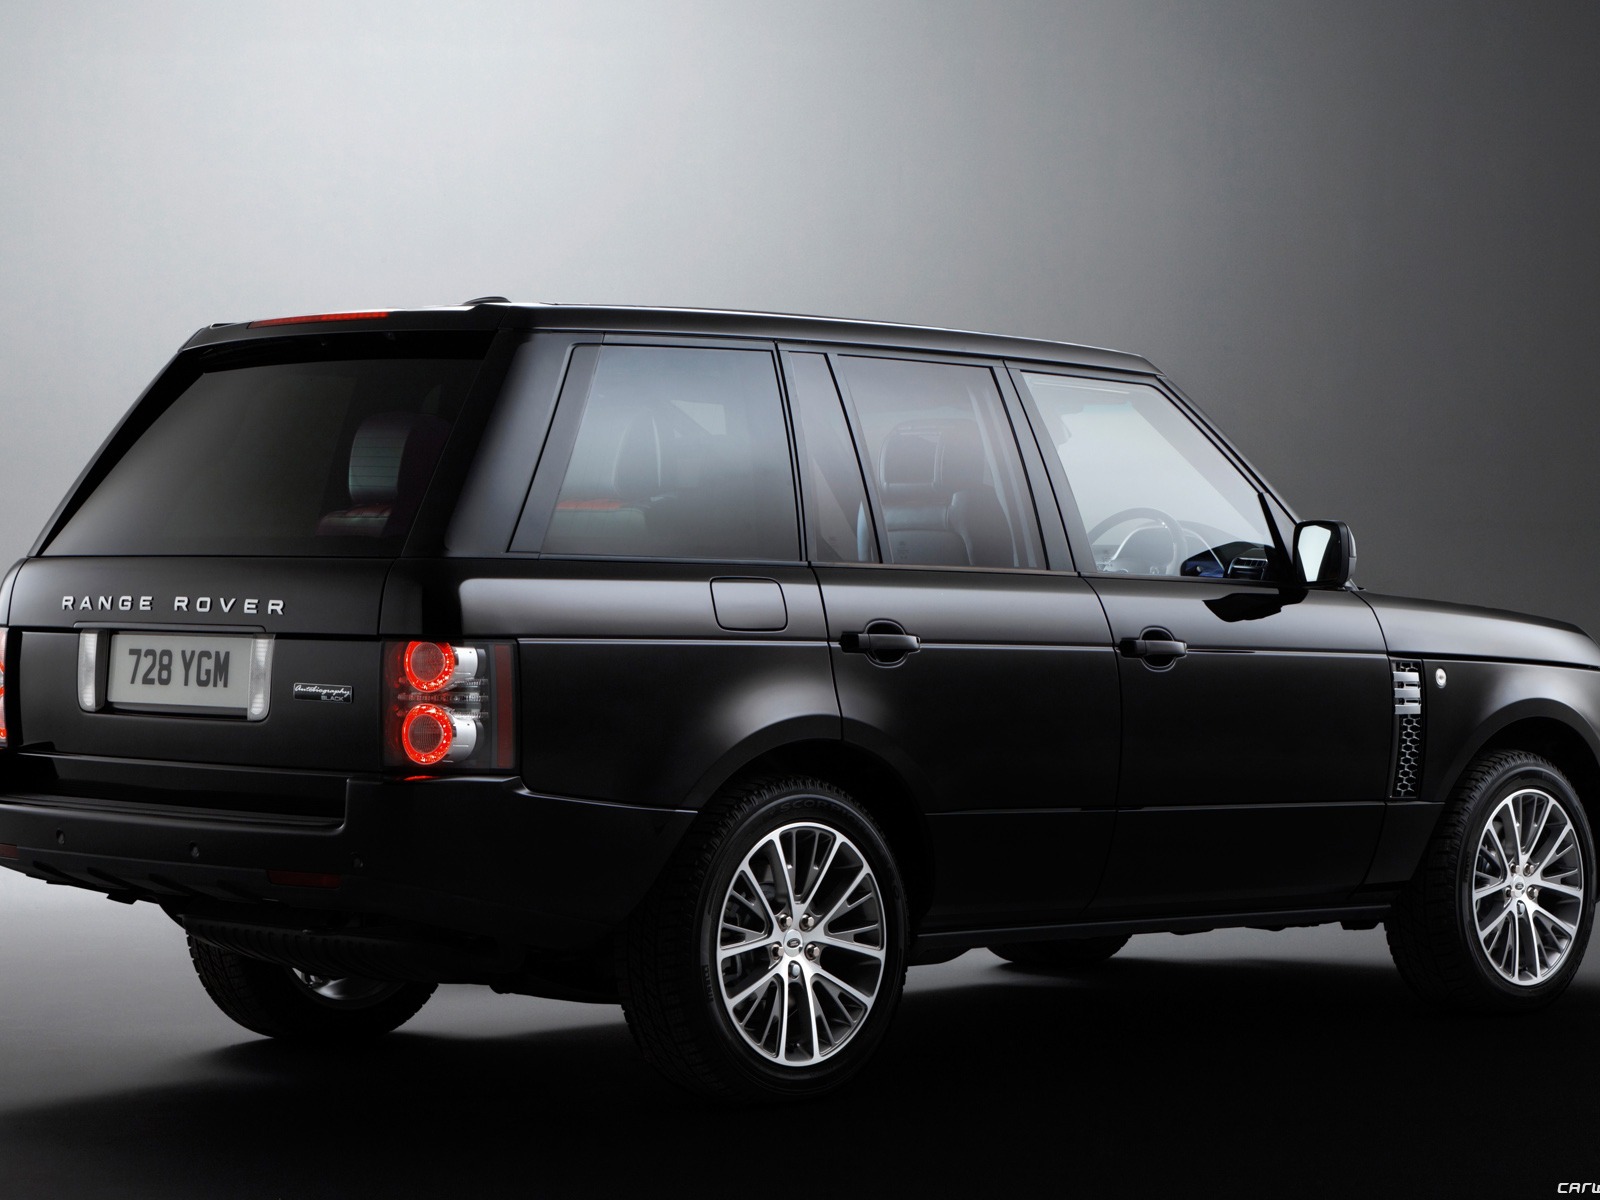 Land Rover Range Rover Black Edition - 2011 路虎19 - 1600x1200